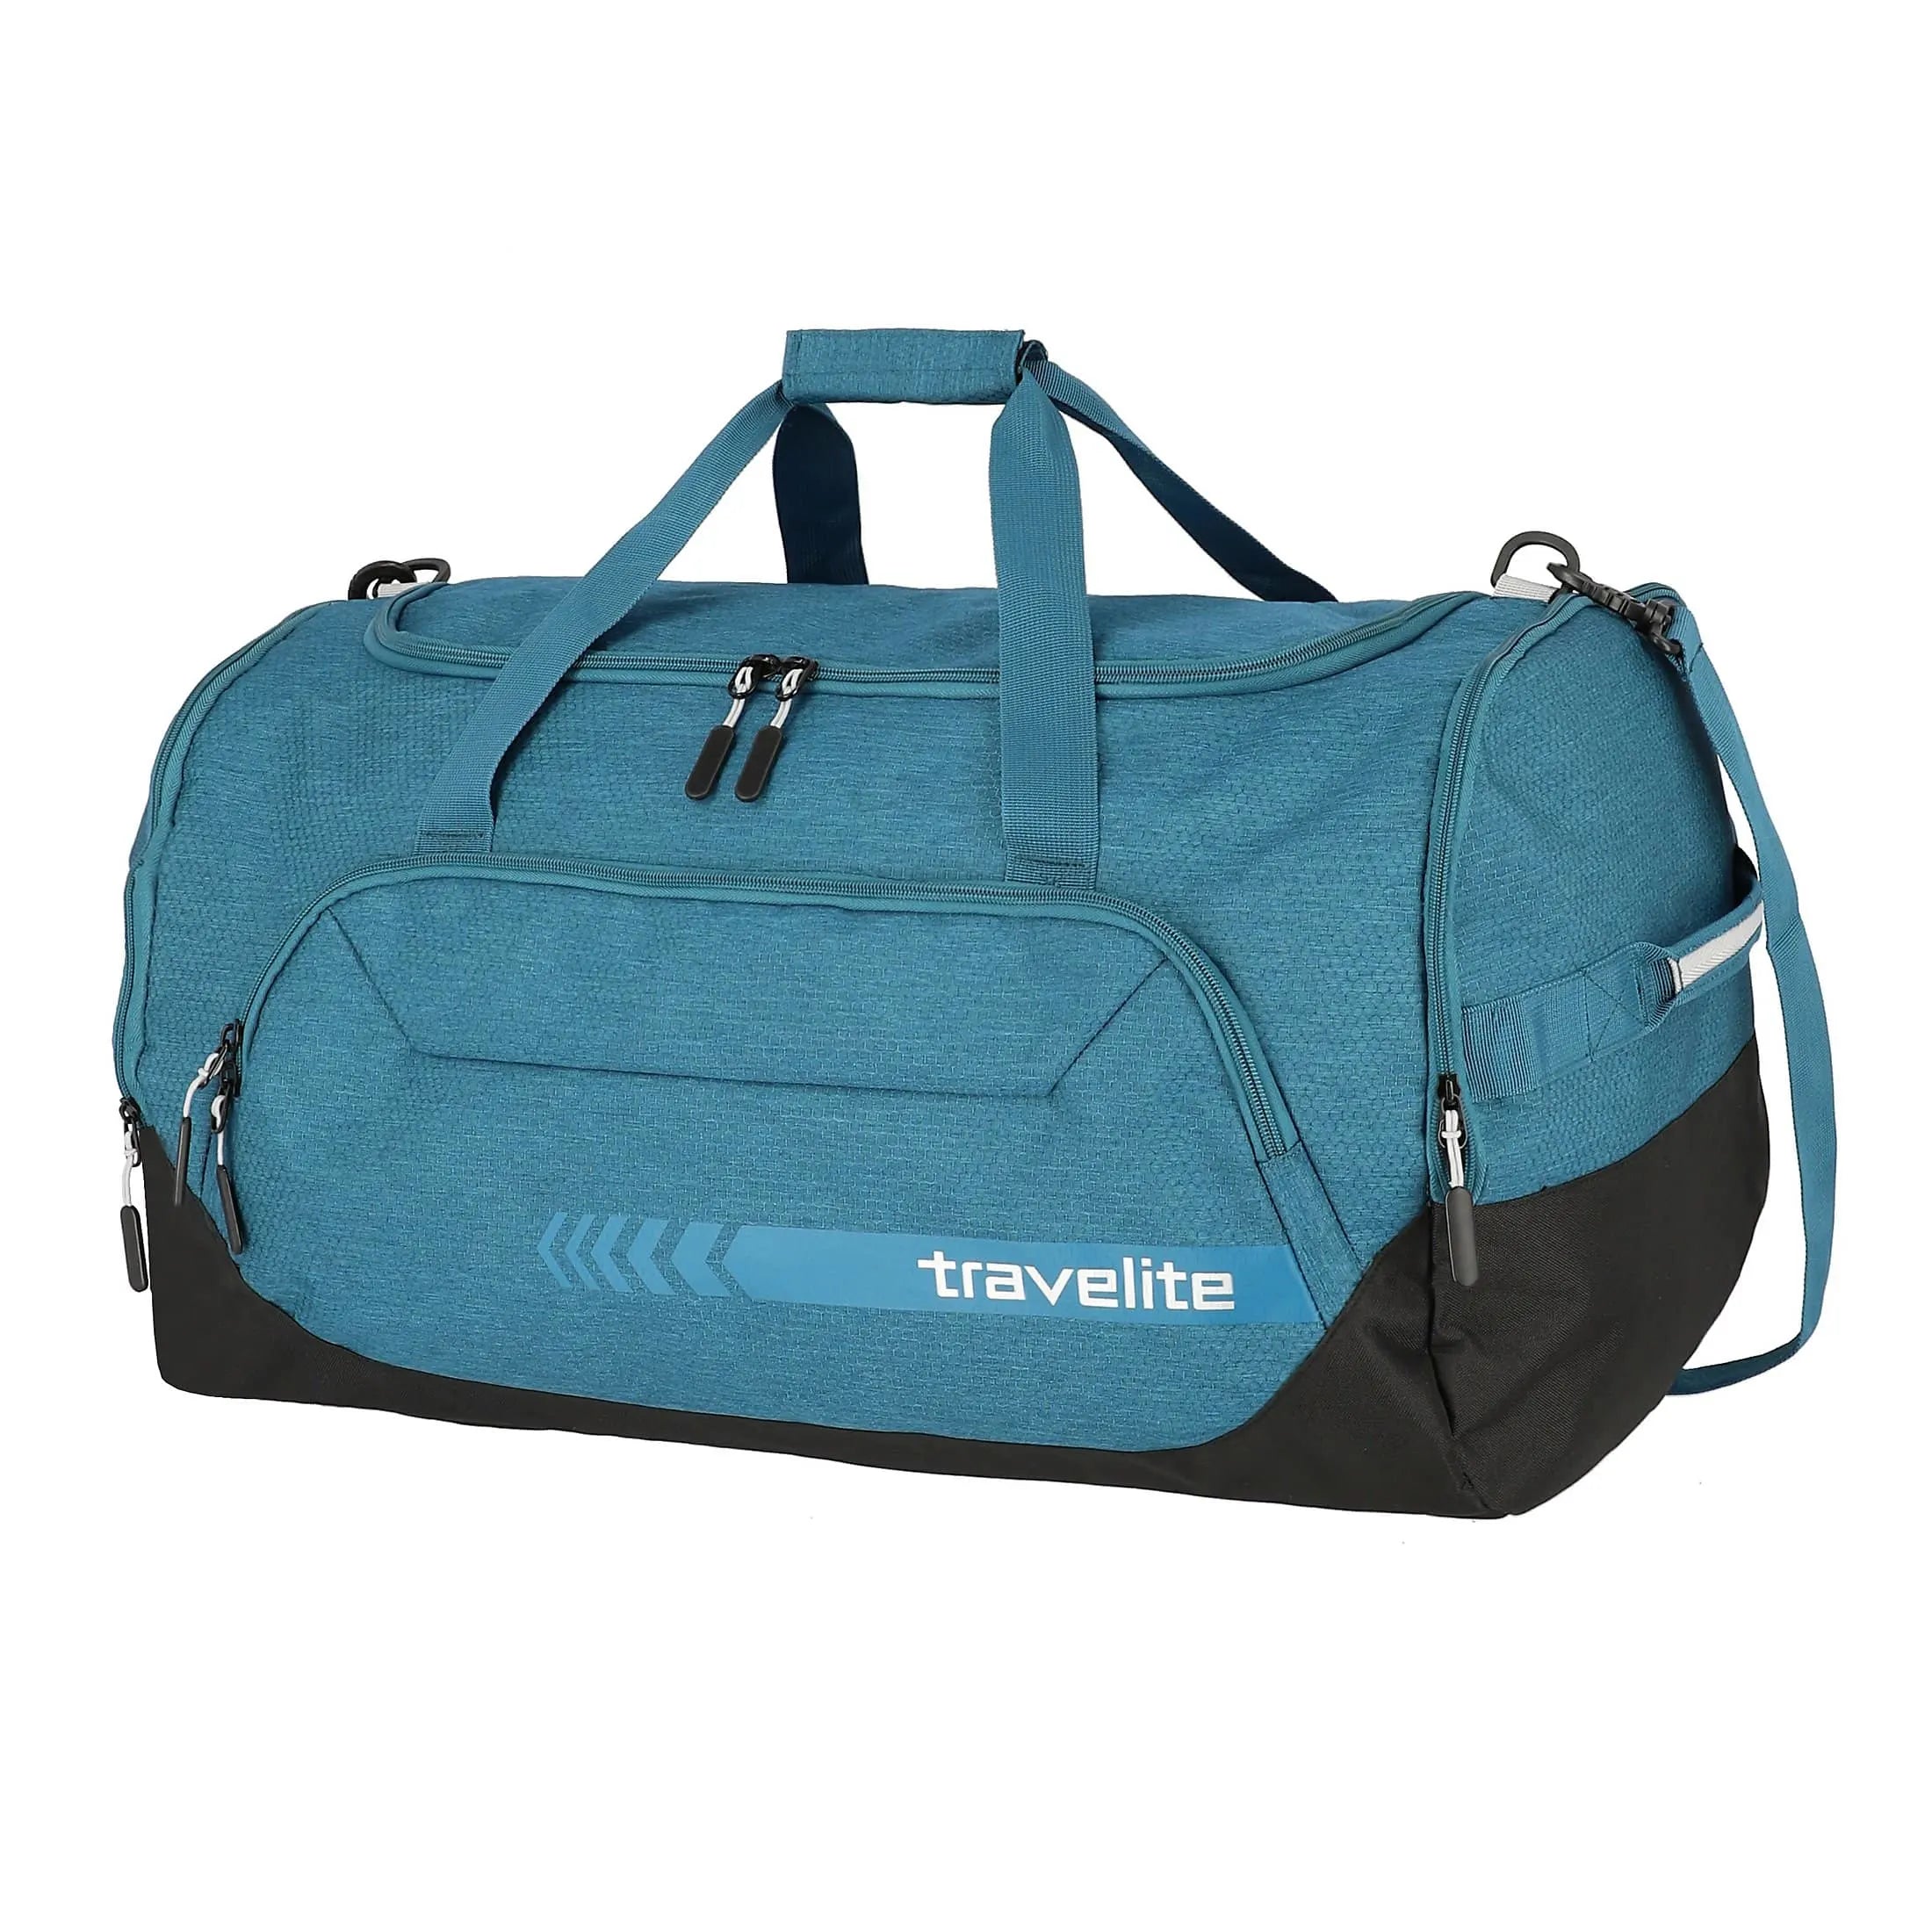 Travelite Kick Off Travel Bag 60 cm - Sage